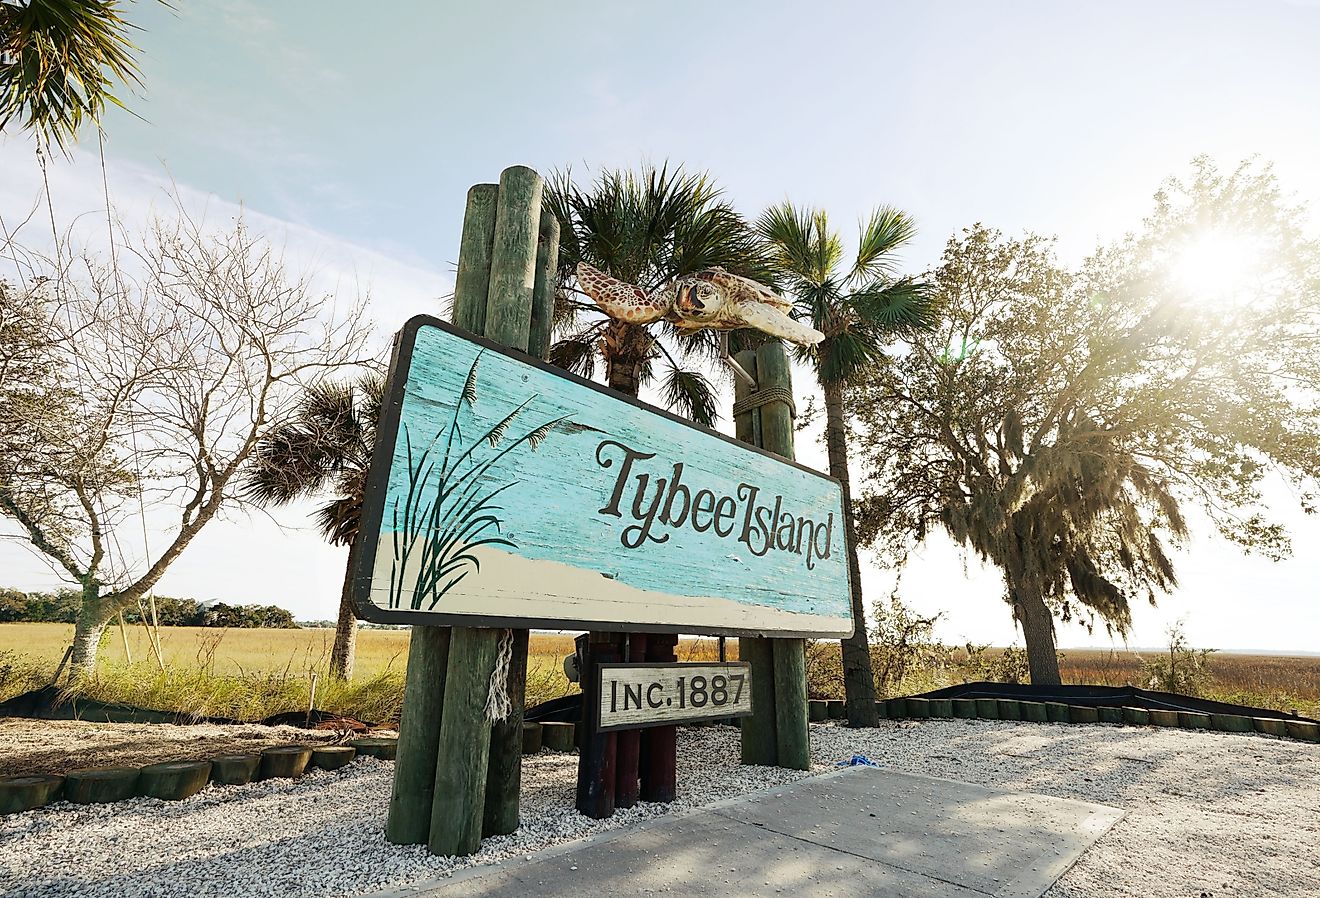 Welcome sign entering Tybee Island near Savannah. Image credit zimmytws via Shutterstock.